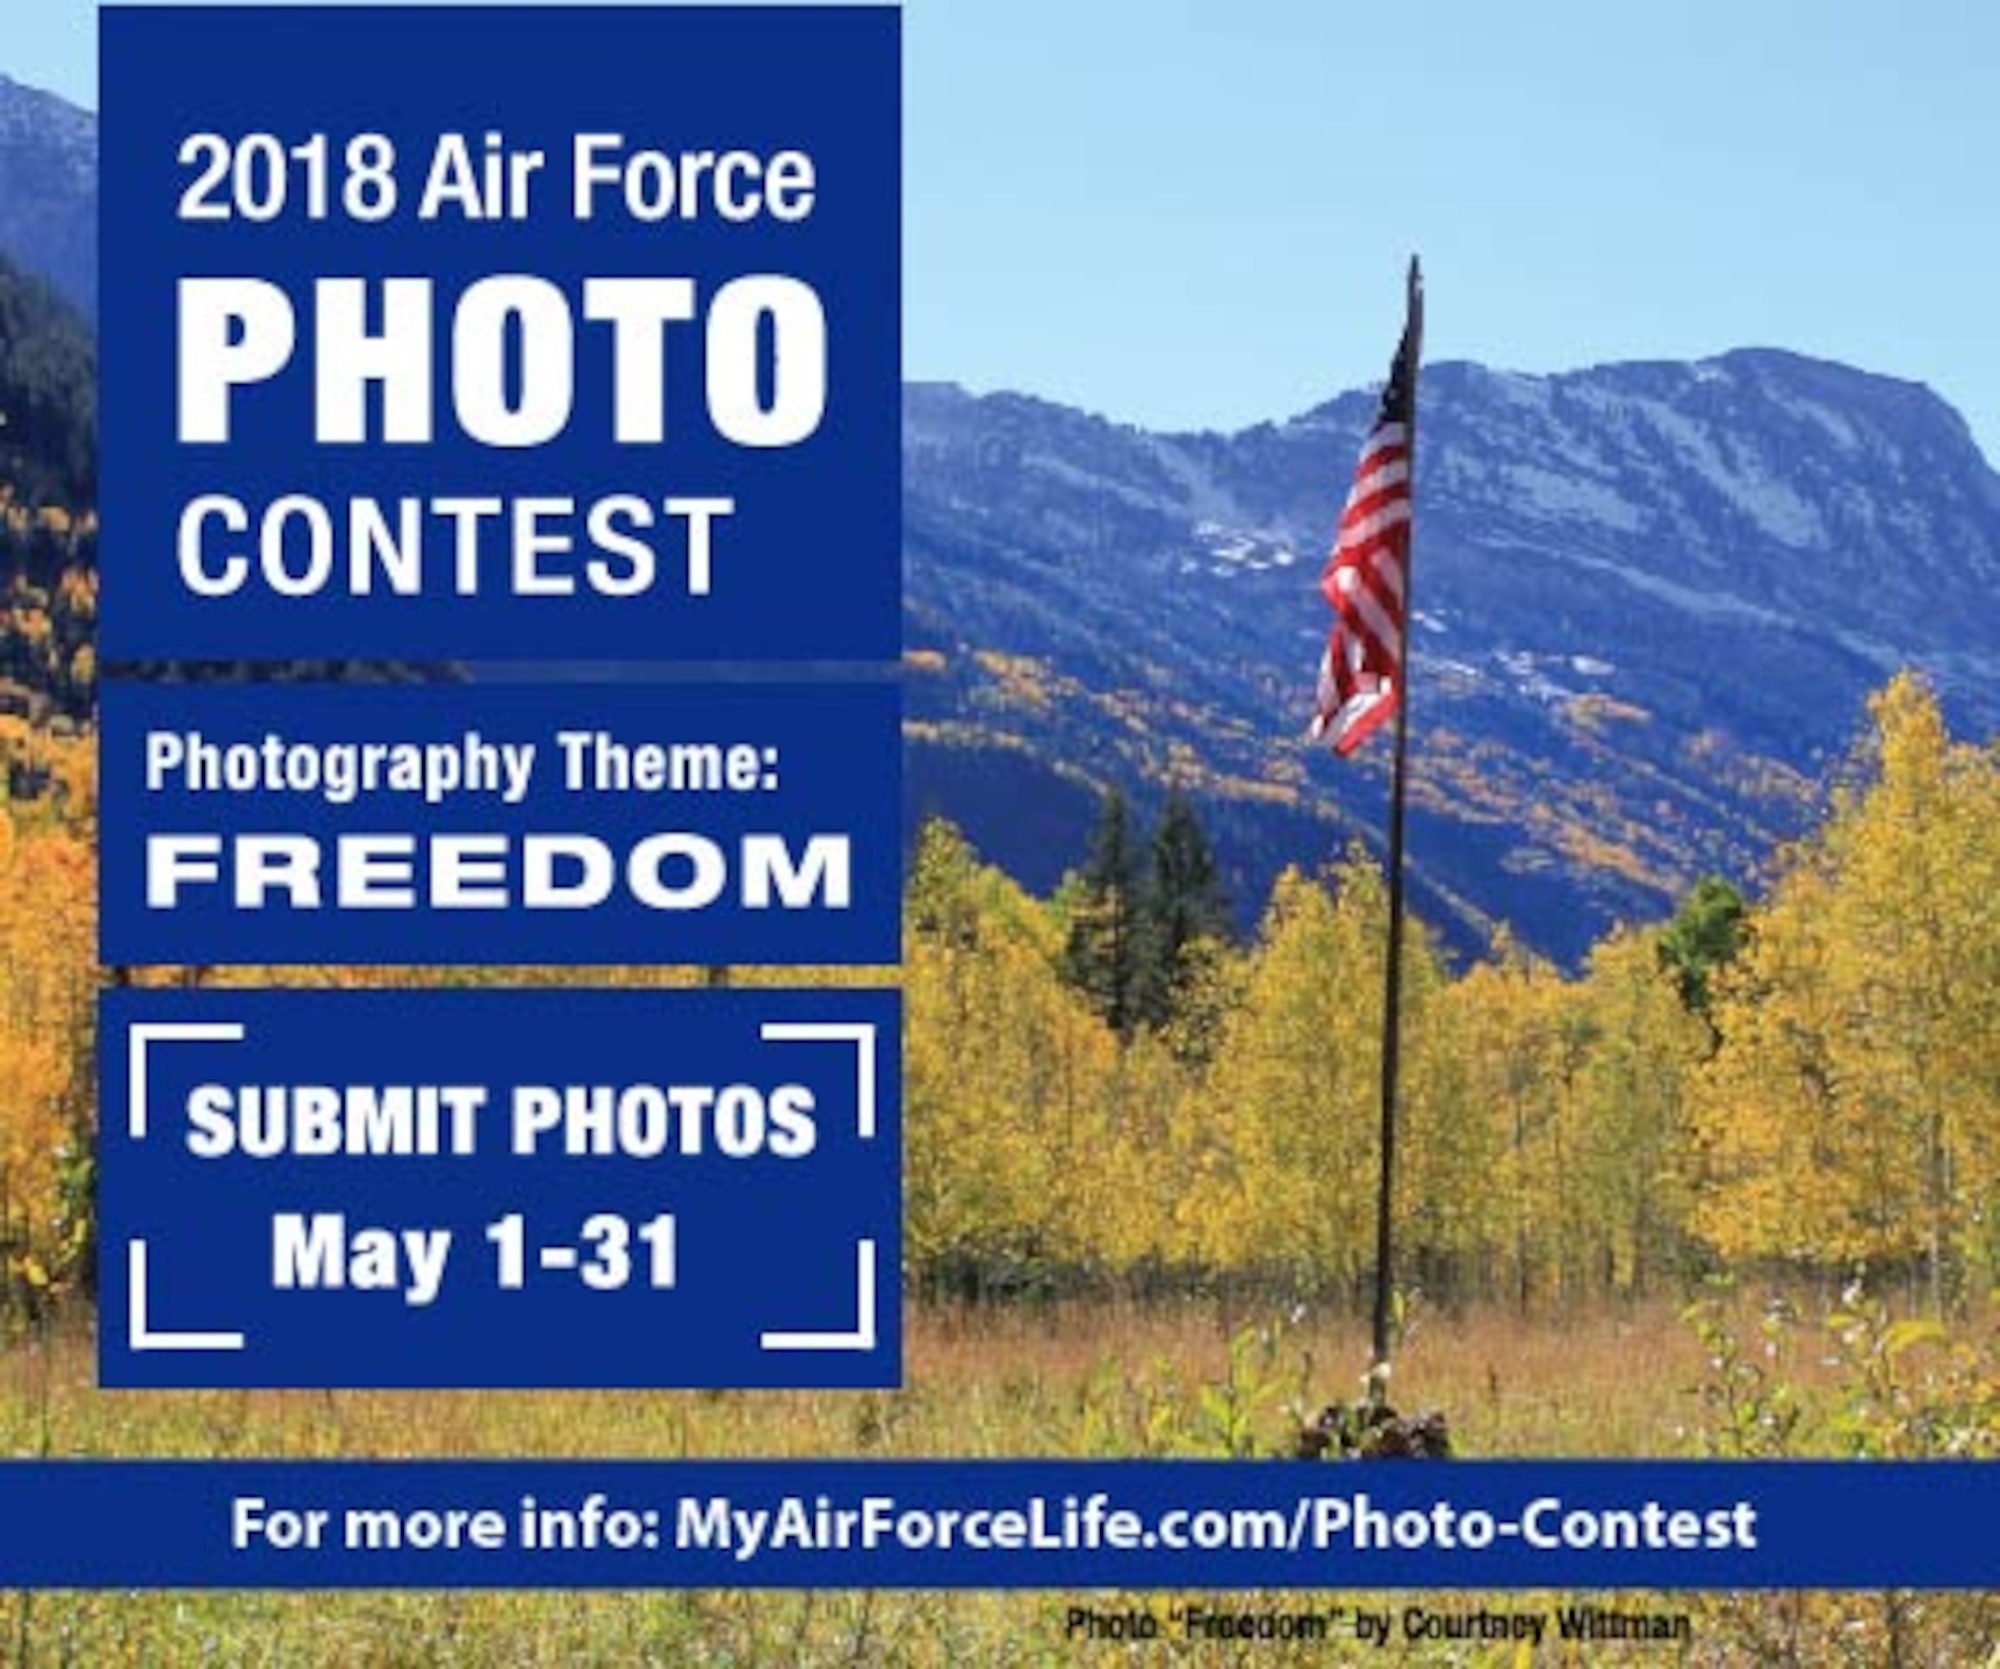 2018 photo contest theme "Freedom"